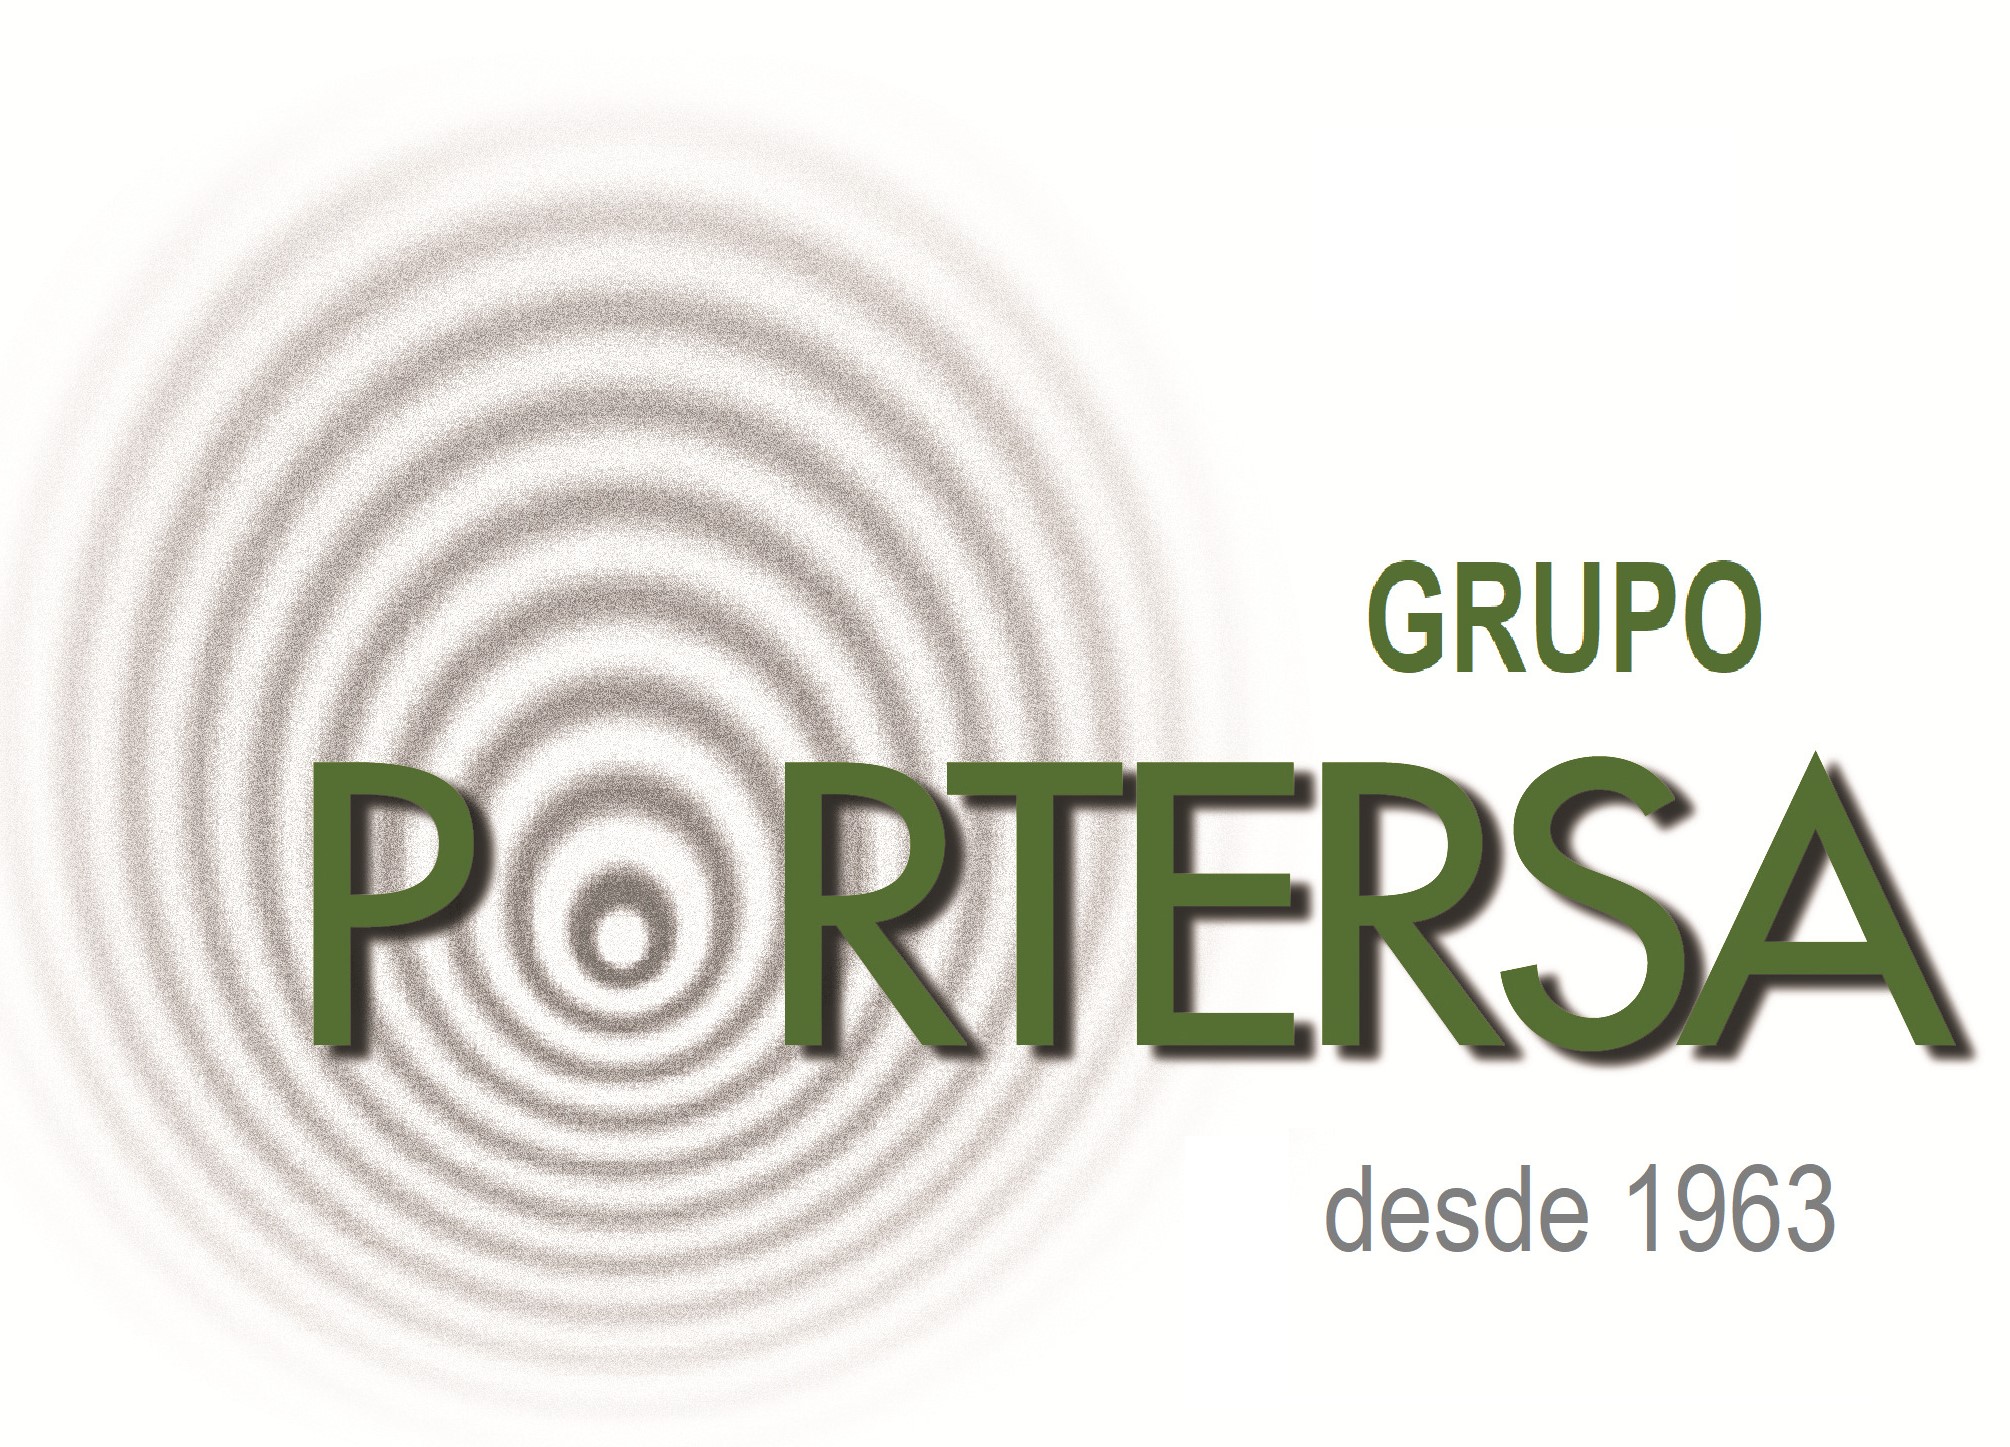 Grupo Portersa